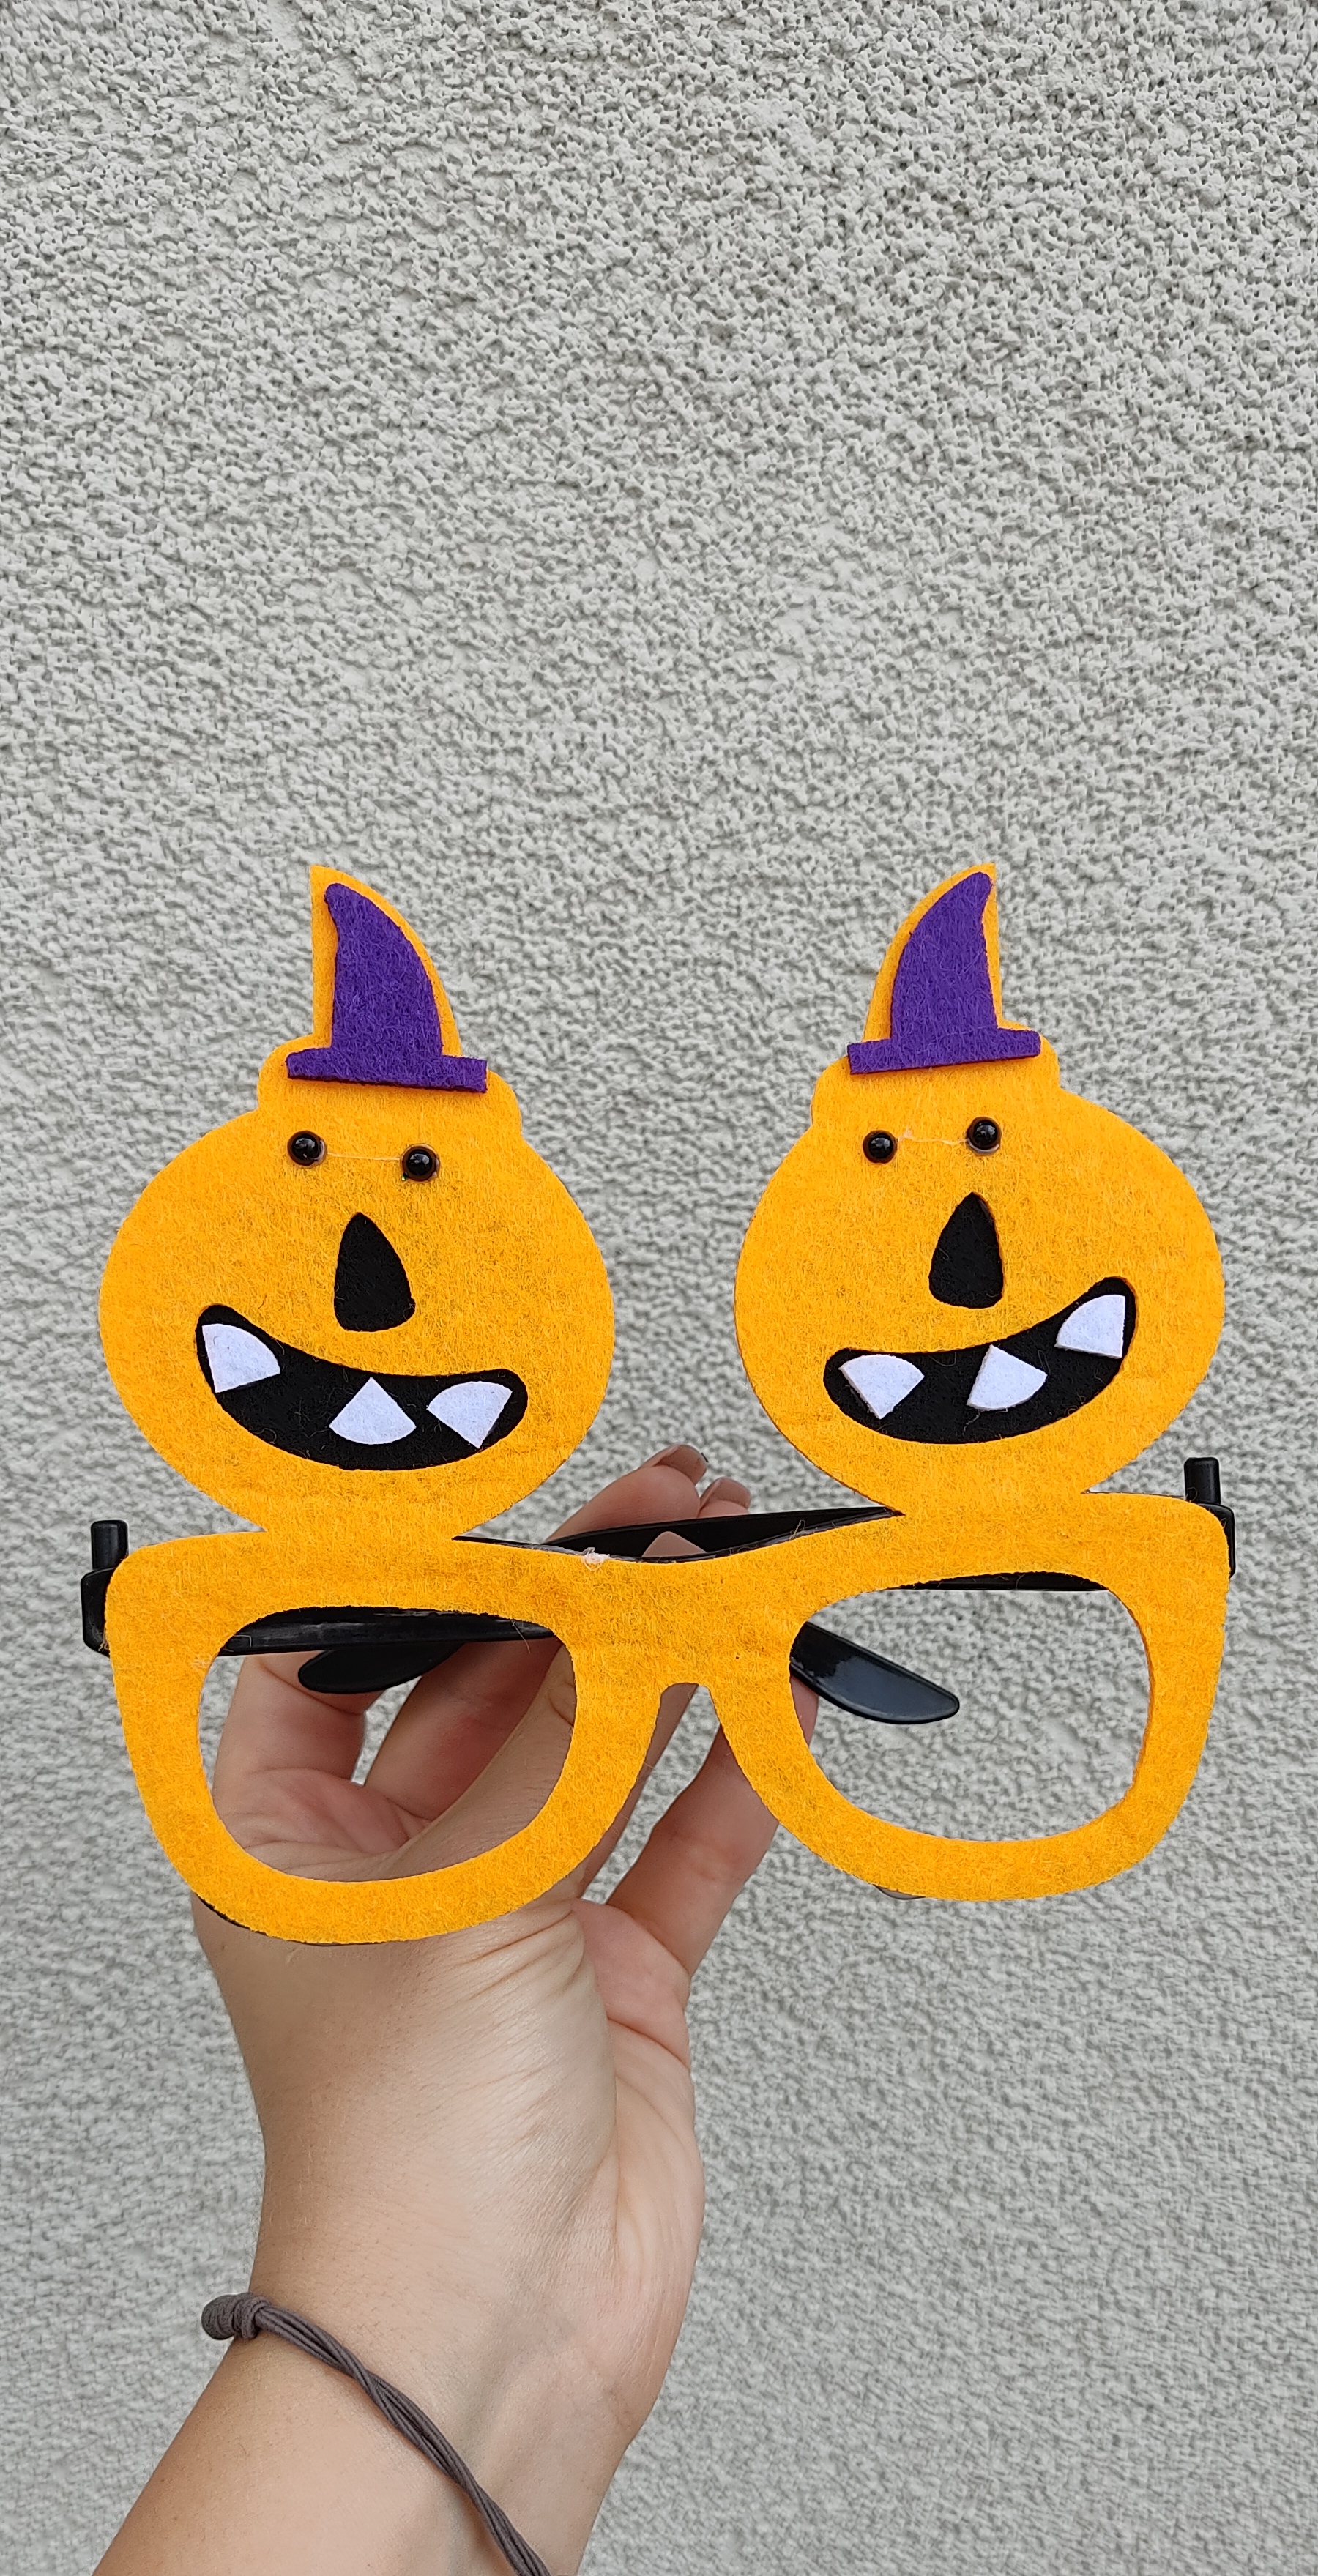 Детские очки на Хэллоуин